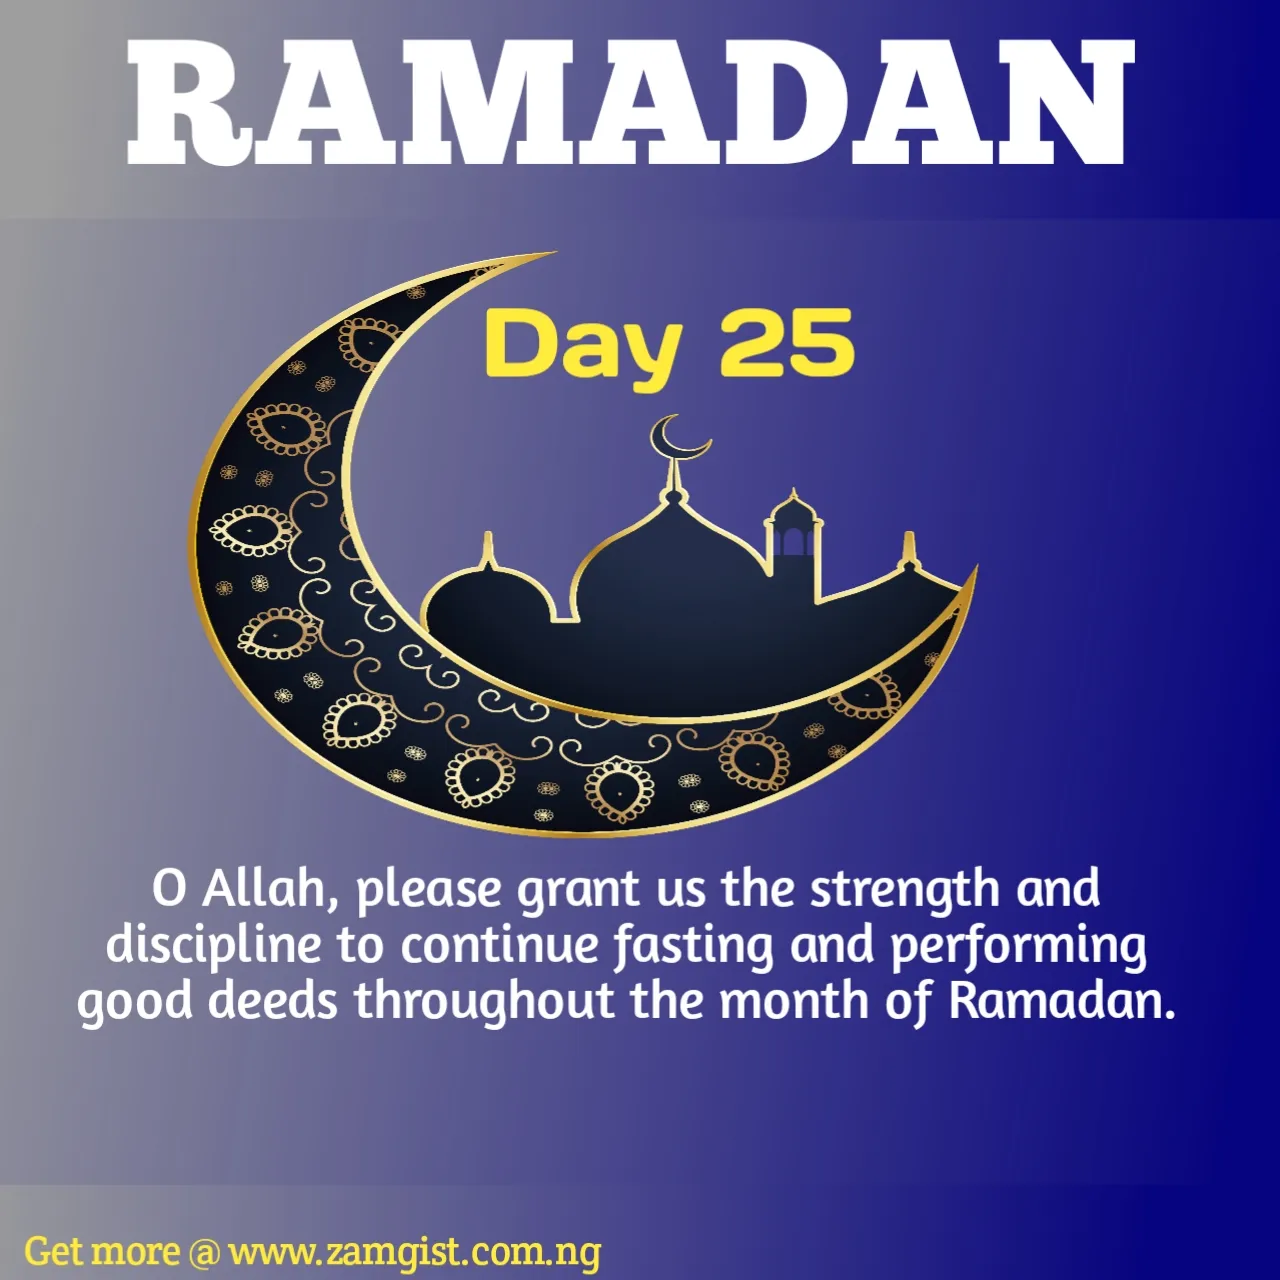 Ramadan day 25 image